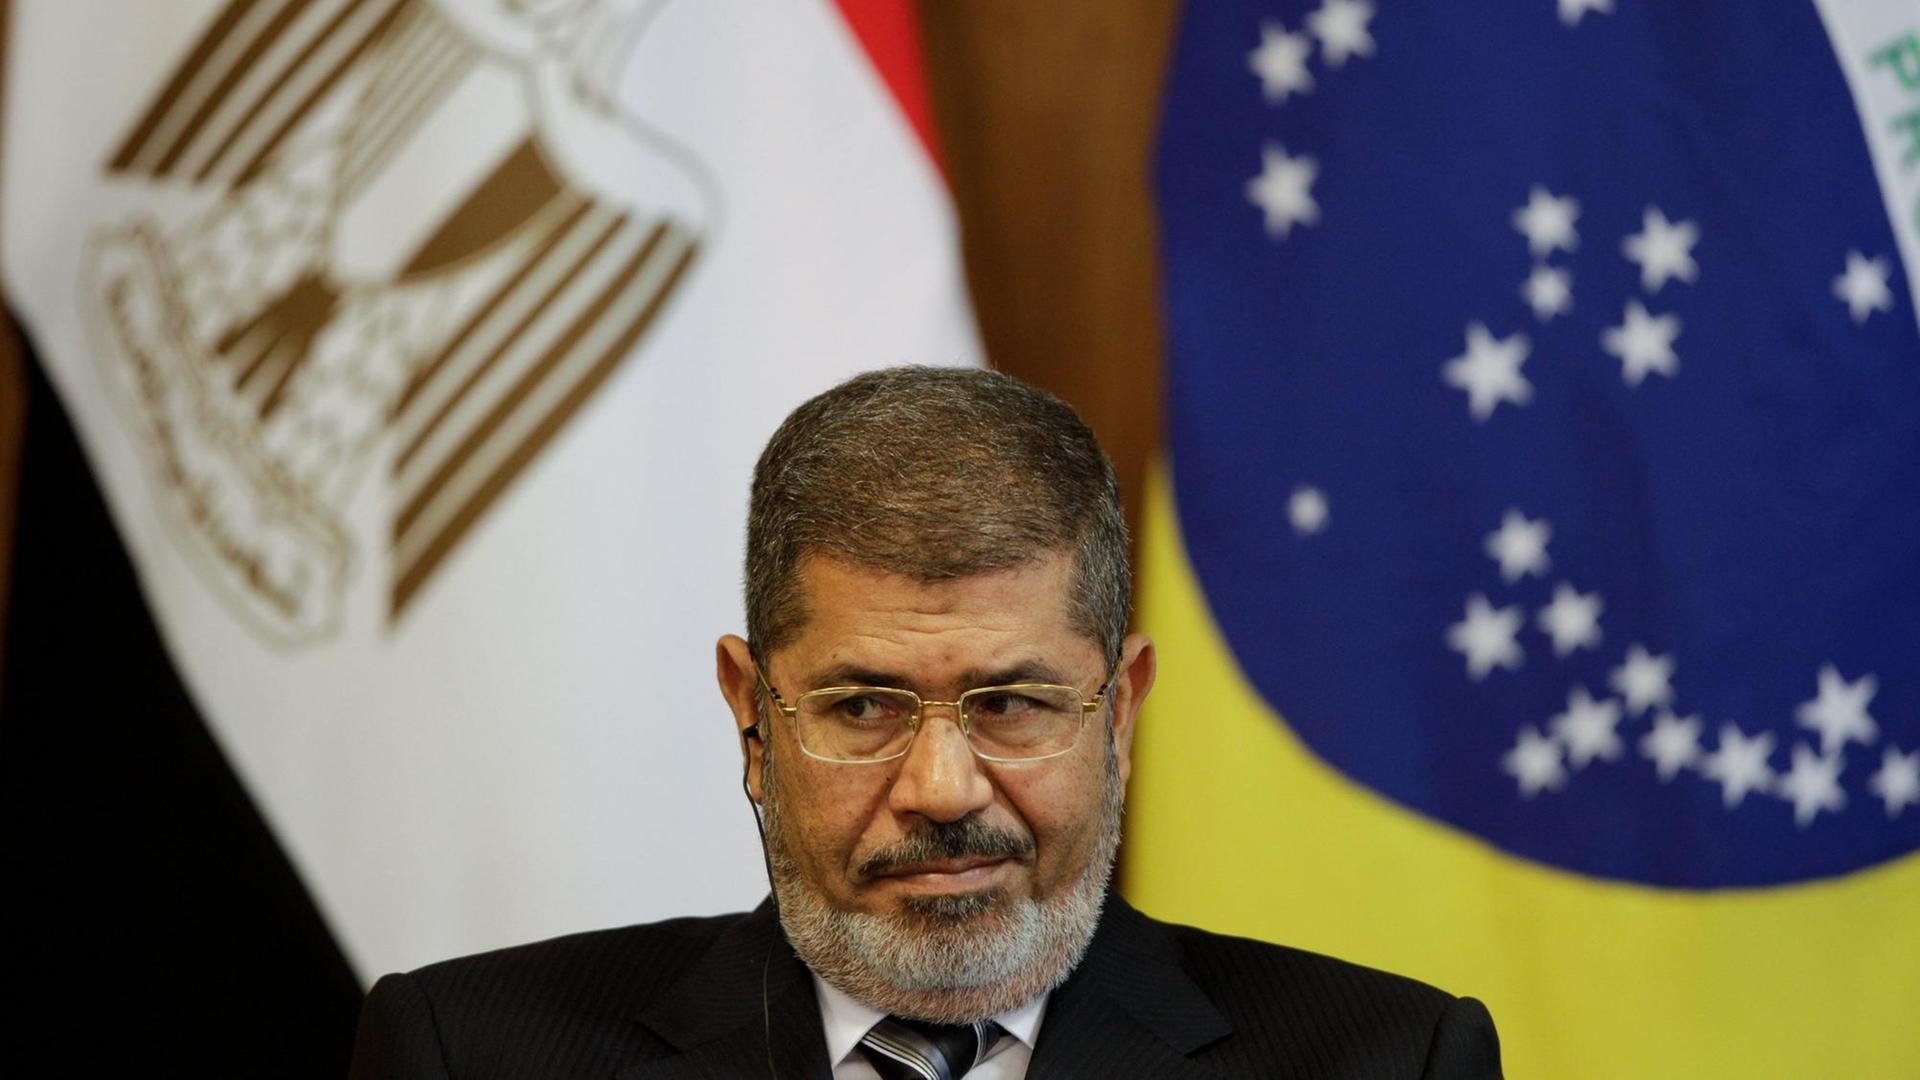 Der frühere ägyptische Präsident Mohammed Mursi